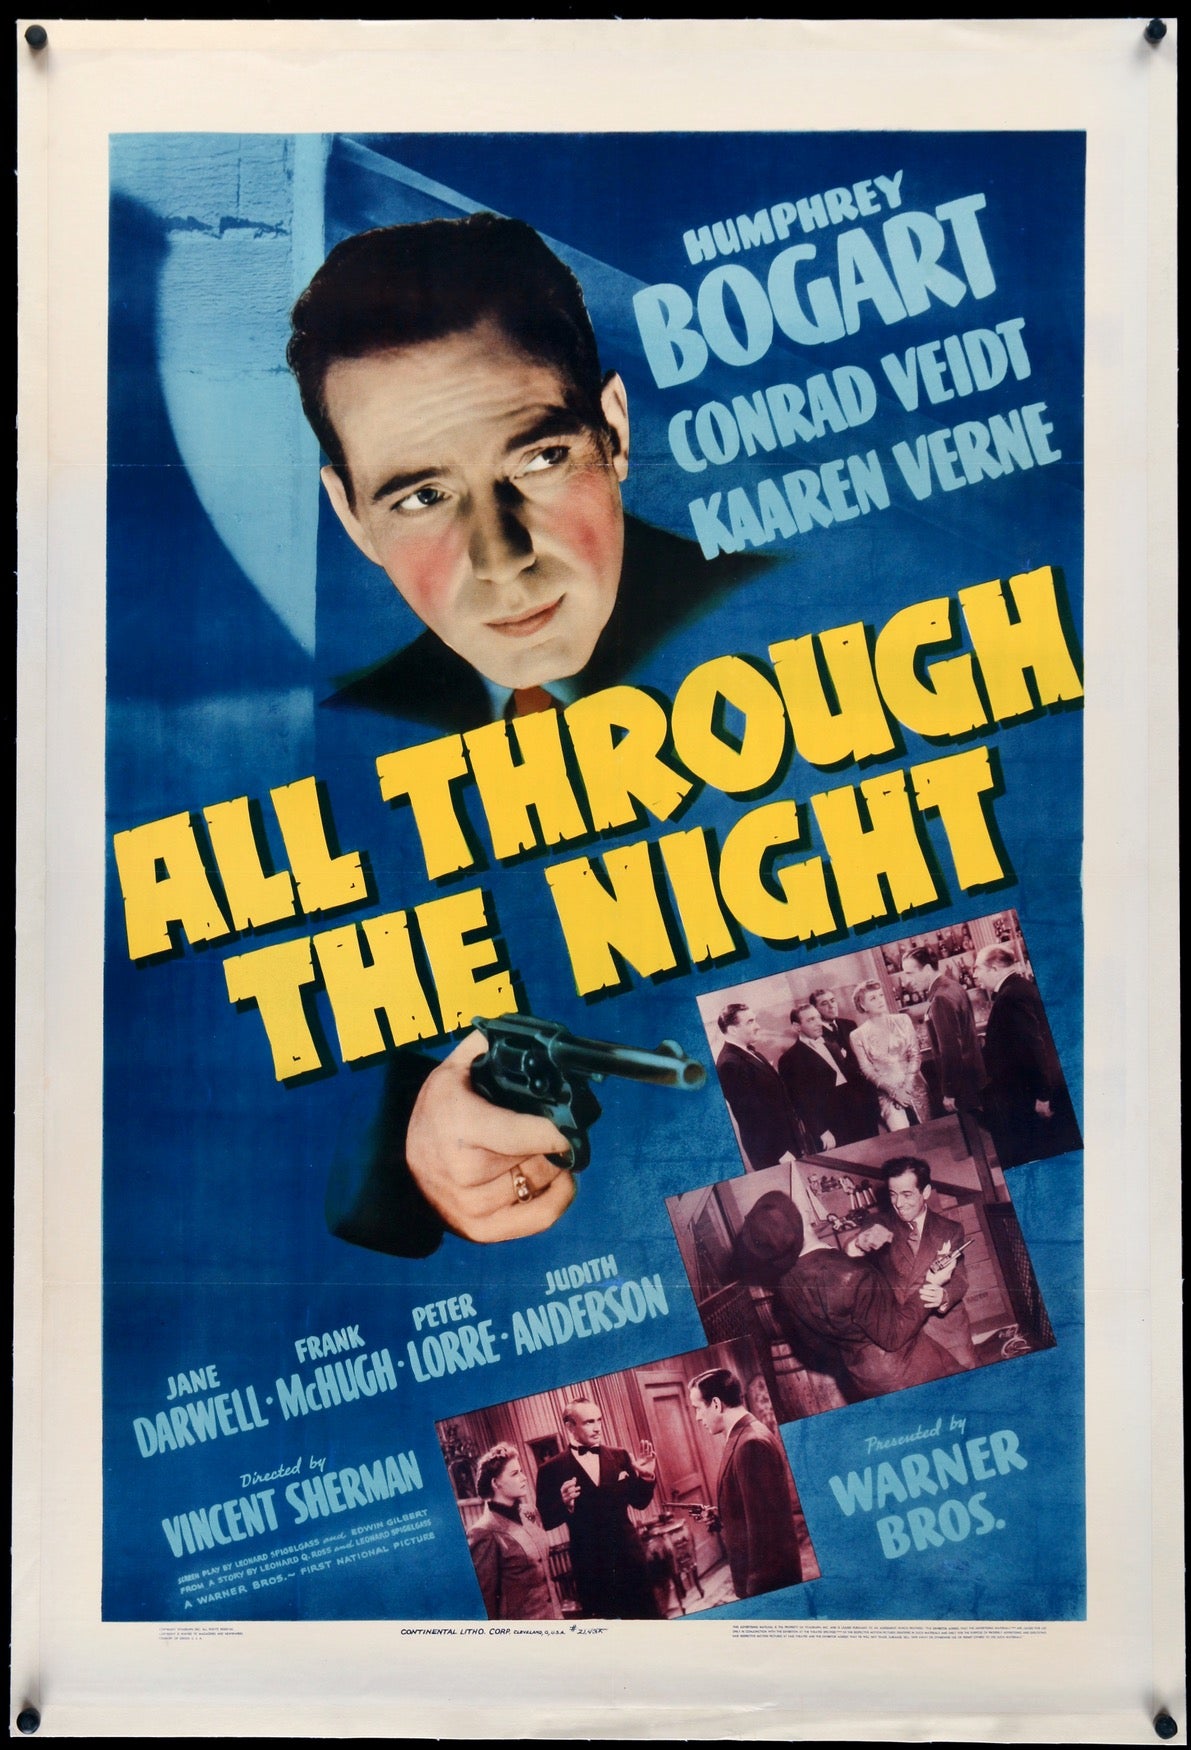 All Through the Night (1942) original movie poster for sale at Original Film Art